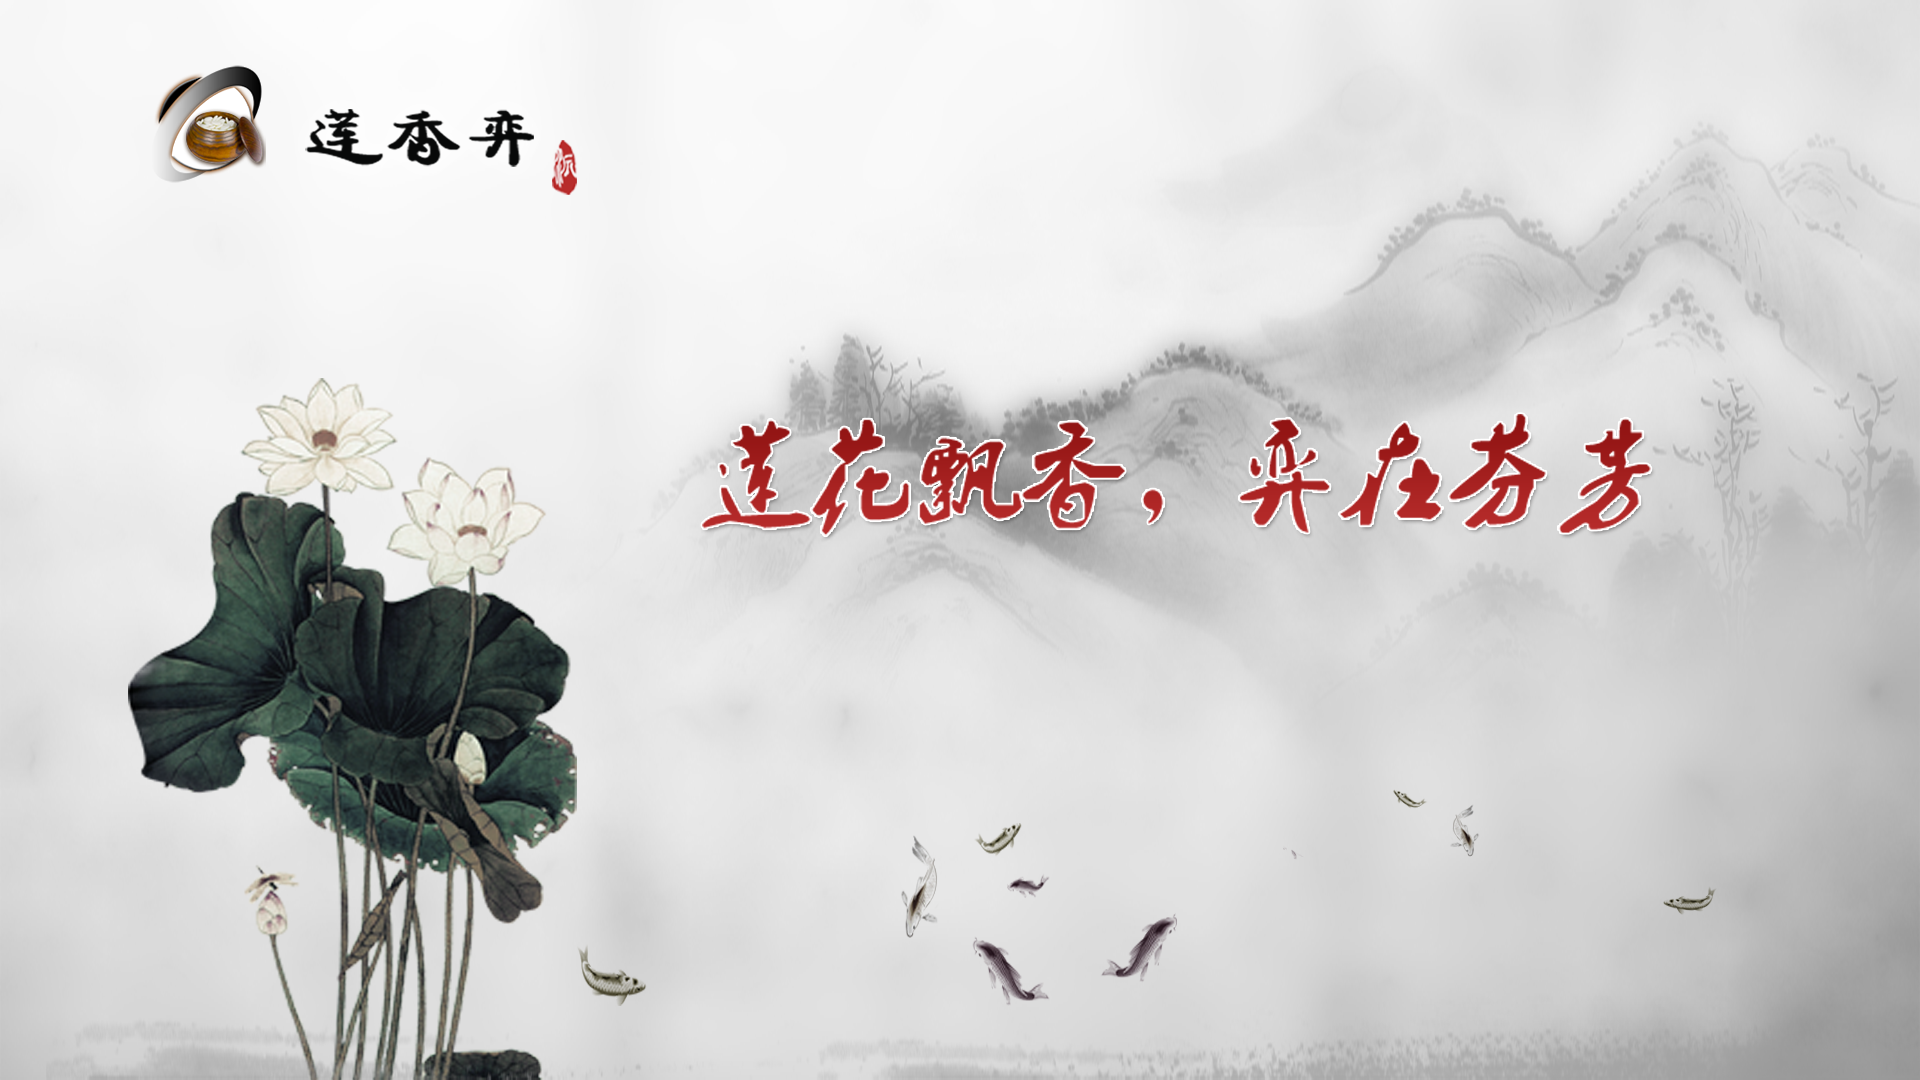 Banner of Lian Xiang รับบทเป็น Go 8.20.26